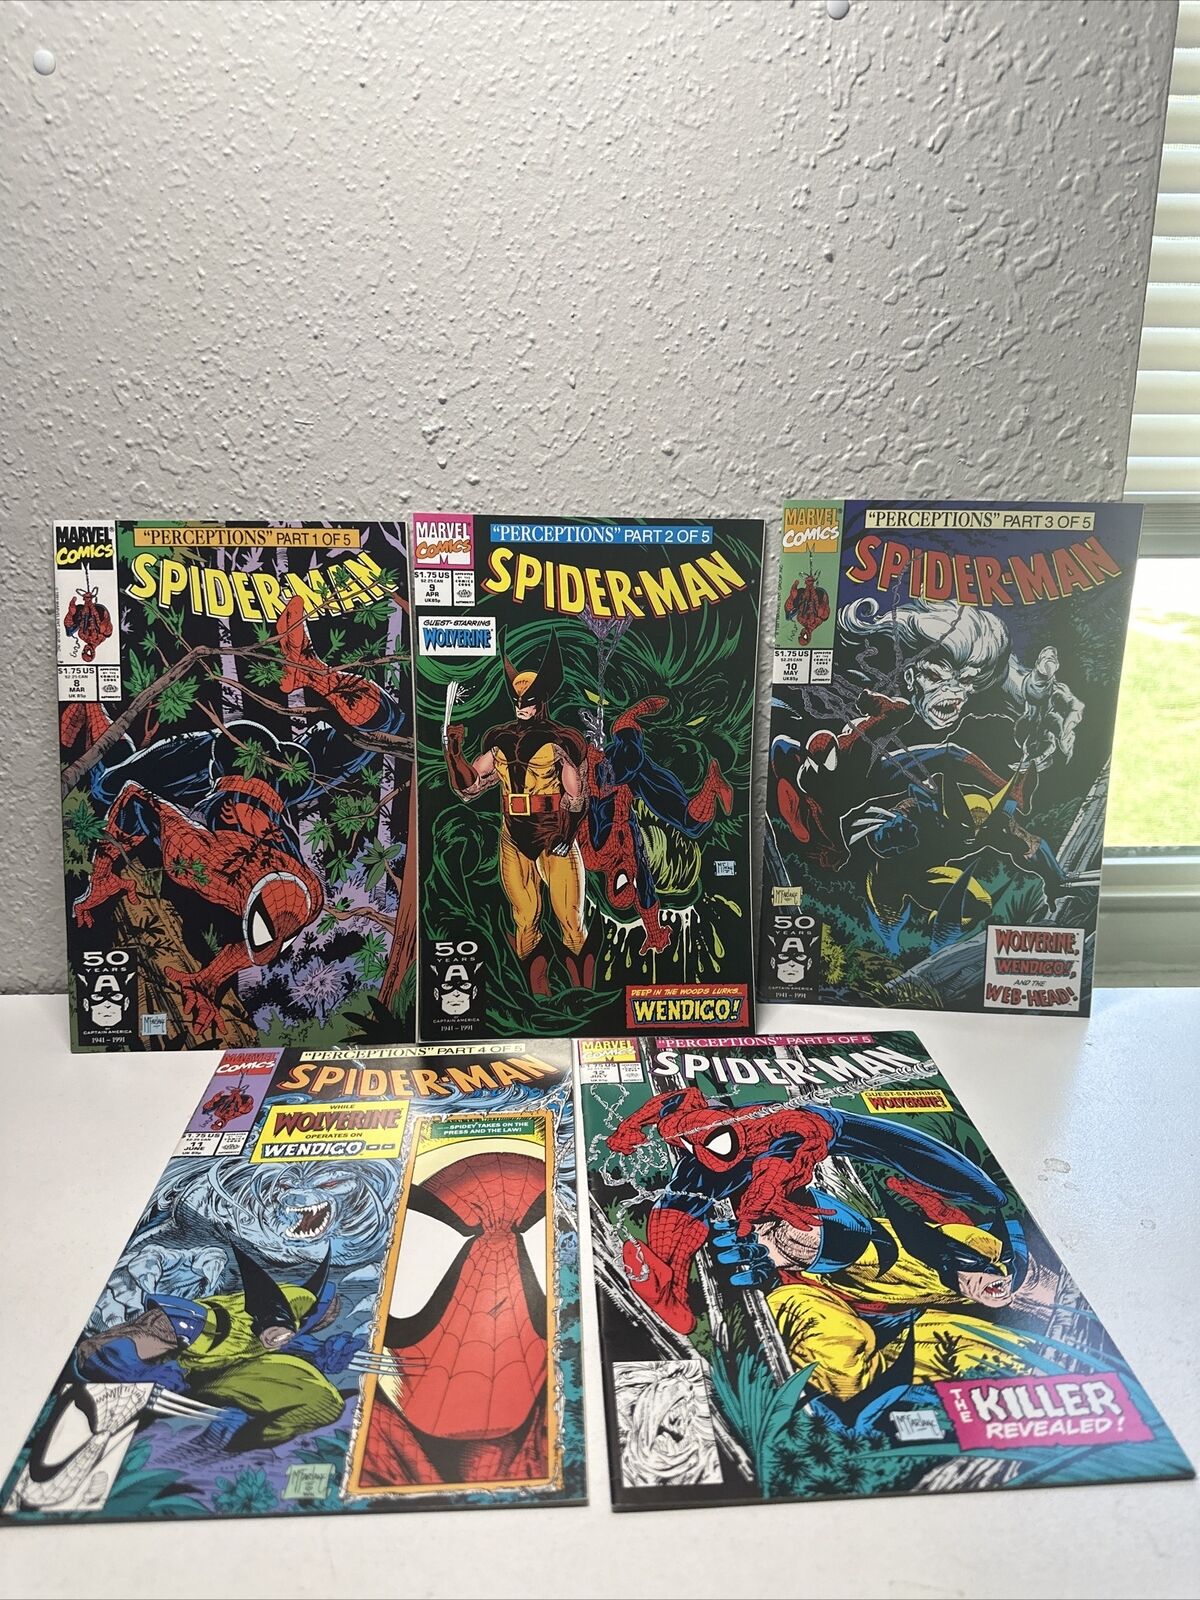 Spider-Man (1991) #8 - #12 Perceptions full set/Parts 1-5 Marvel